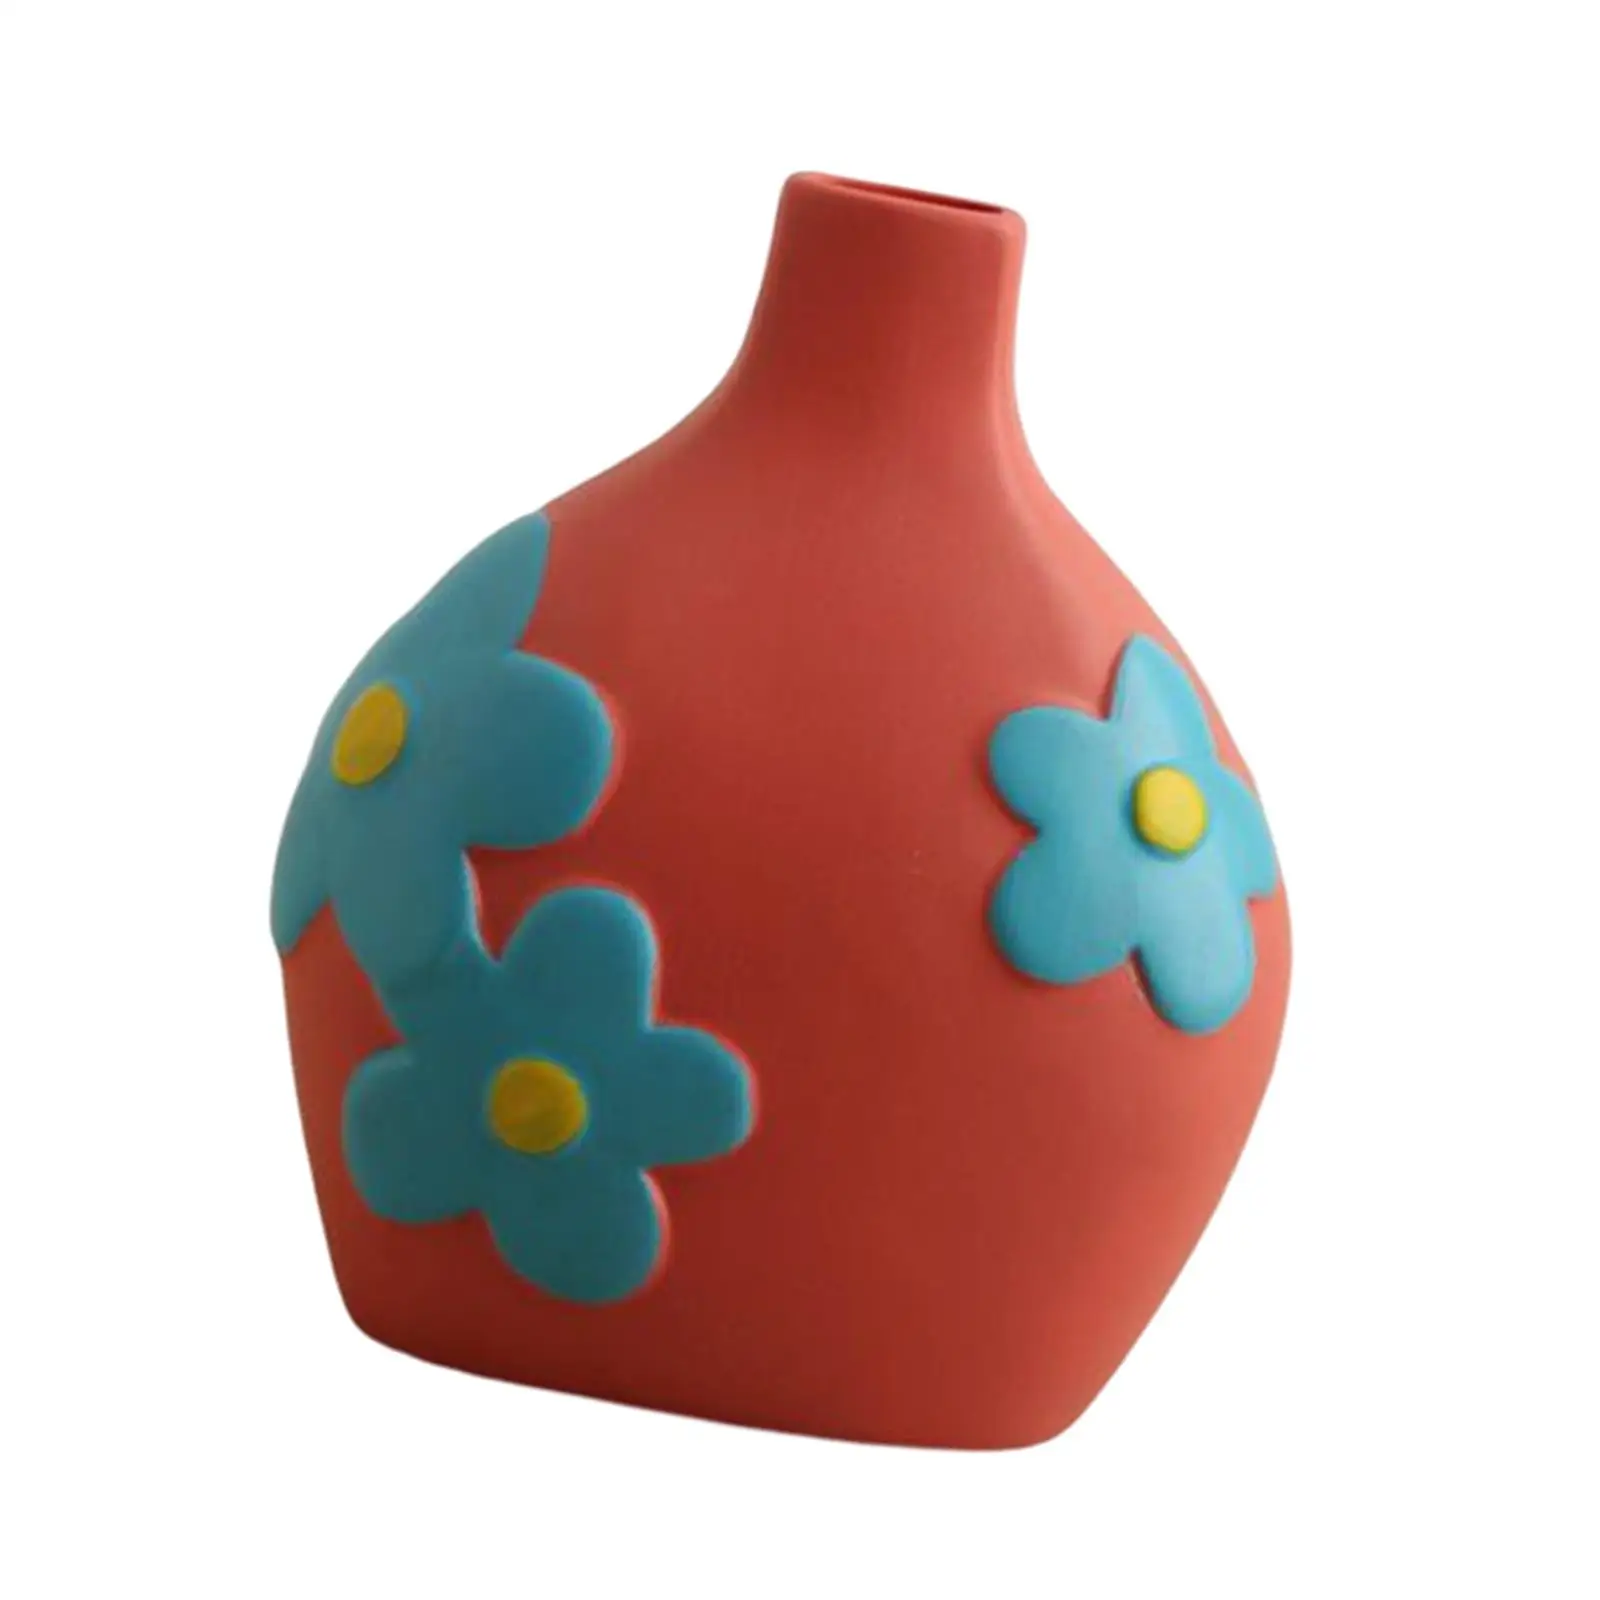 Flower Vase Planter Bottle Tabletop Sculptures Decorative Photo Props Crafts Pot for Home Wedding Dining Room Living Room Party